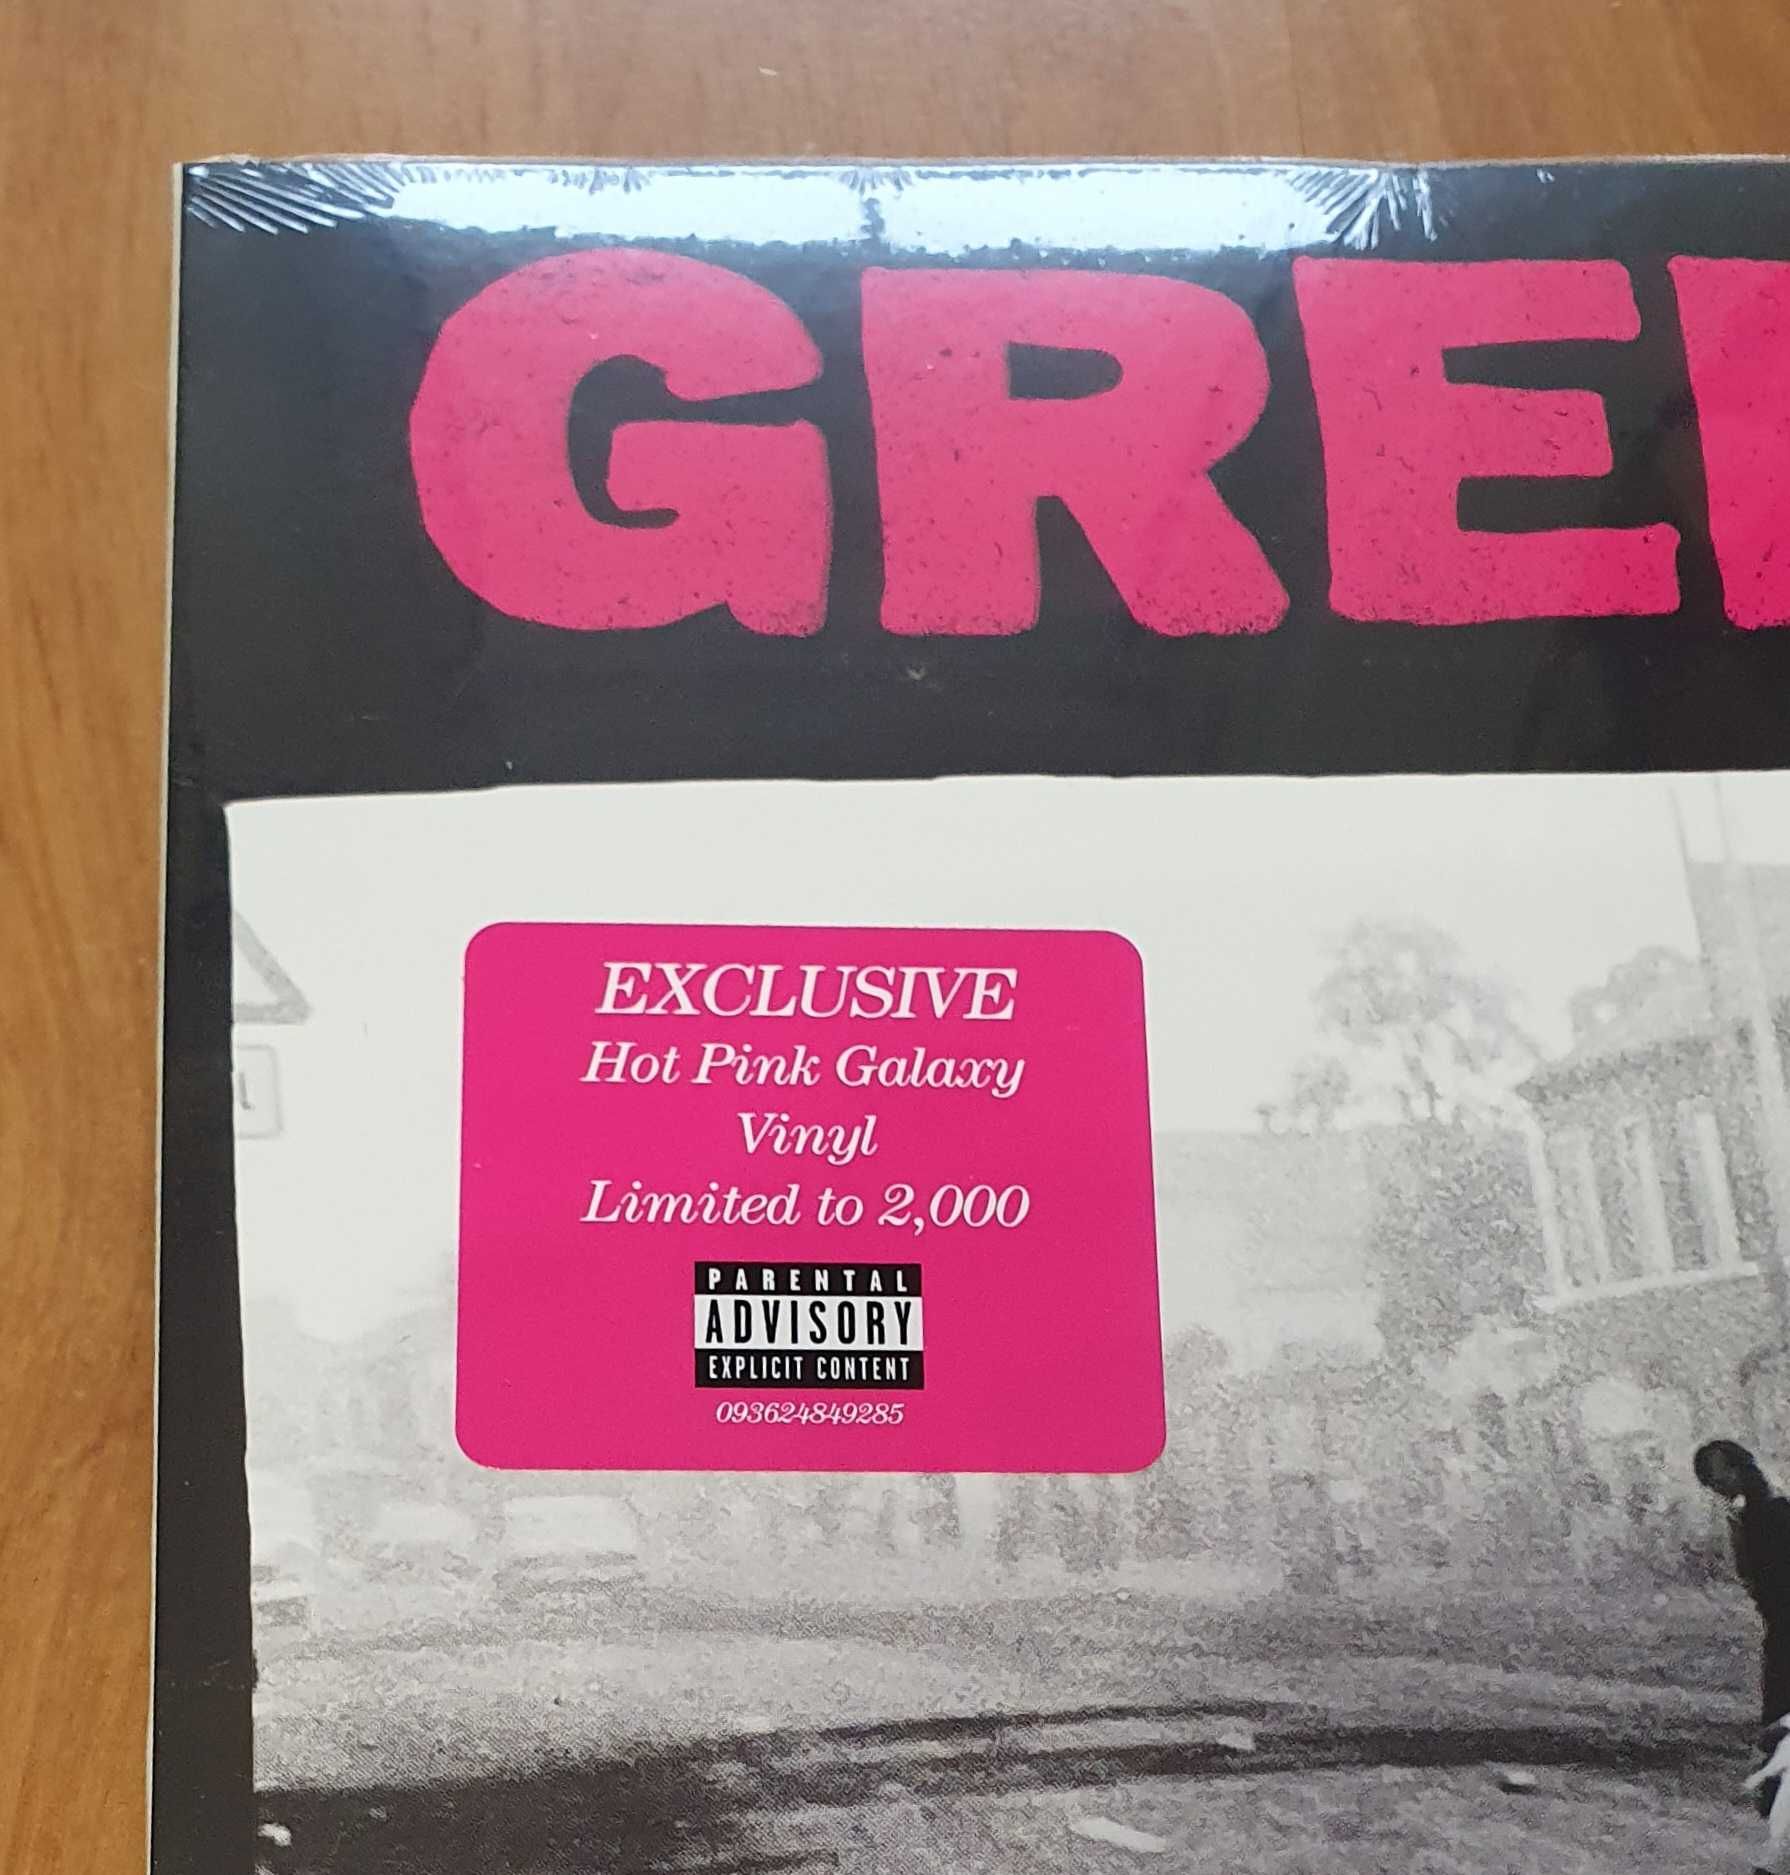 Green Day - SAVIORS, Exclusive Clear Hot Pink Galaxy LP, 2000 sztuk